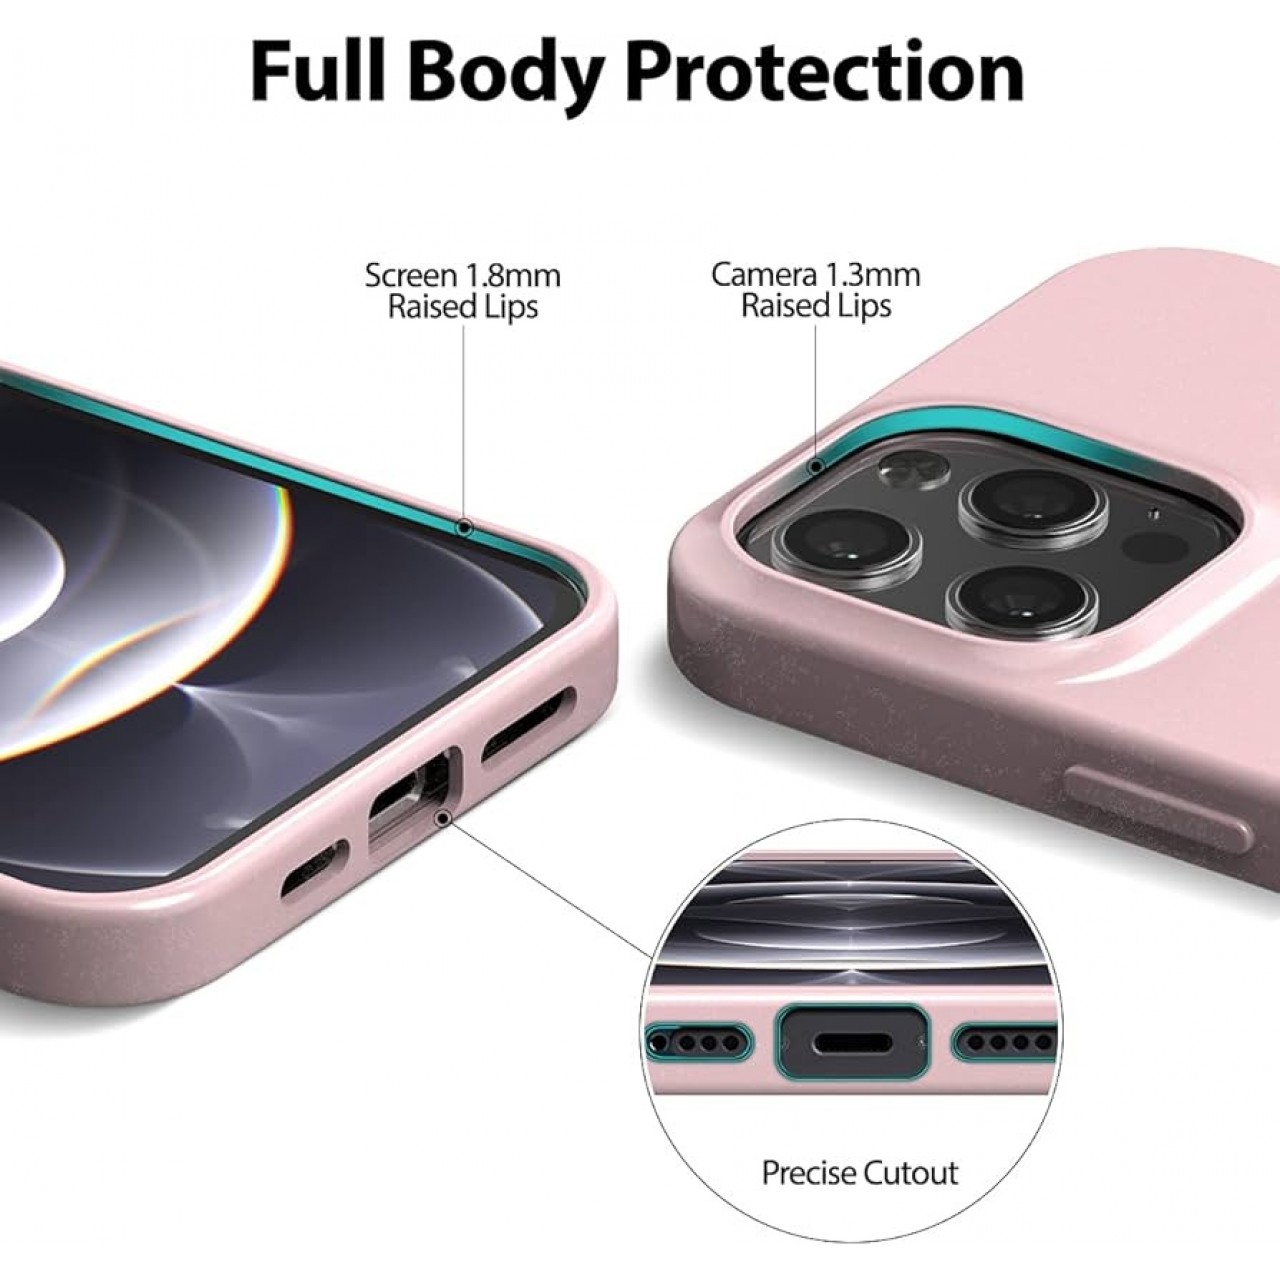 iPhone 11 Pro Max Θήκη Σιλικόνης - Back Case Silicone Black